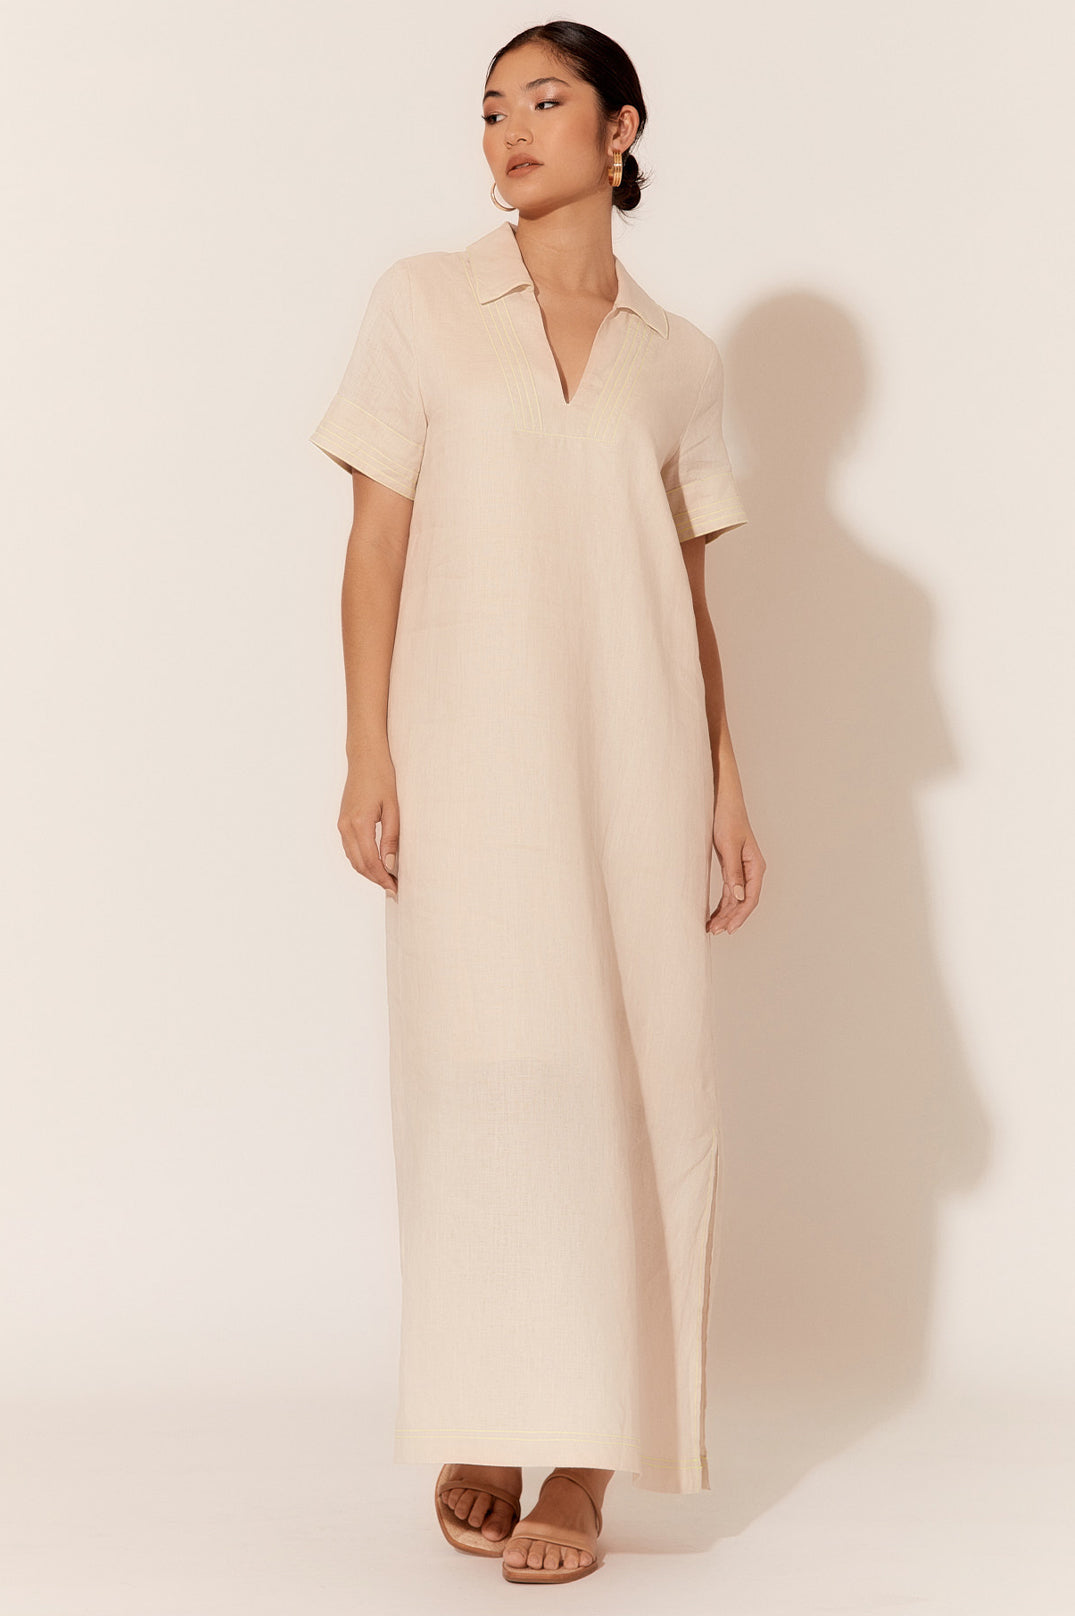 Adorne Melanie Contrast Stitch Linen Dress - Stone